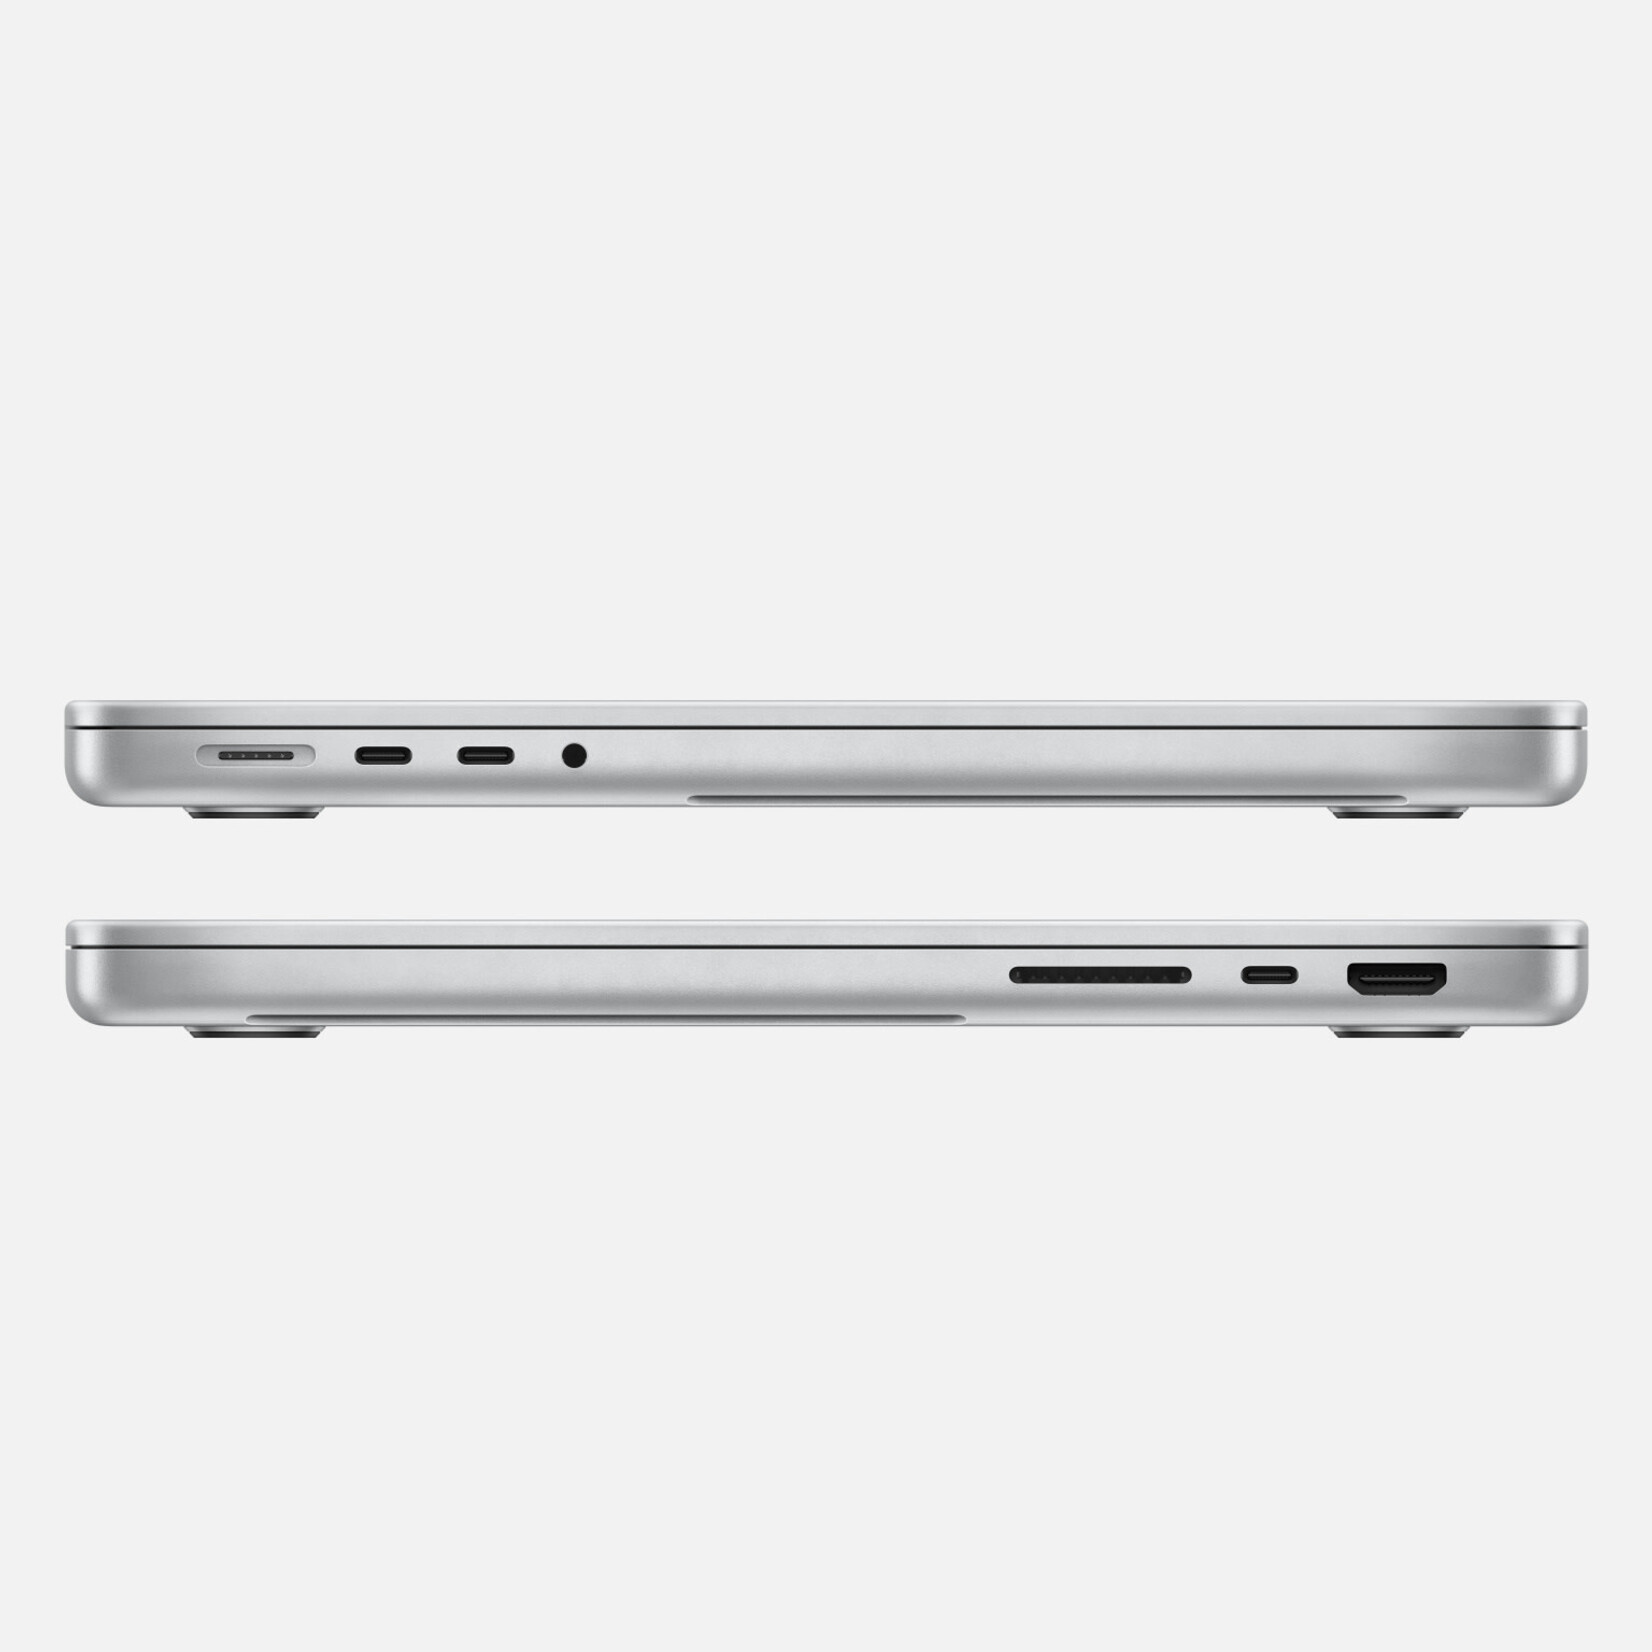 Apple 14-inch MacBook Pro: M2 Max chip, 32gb, 1tb